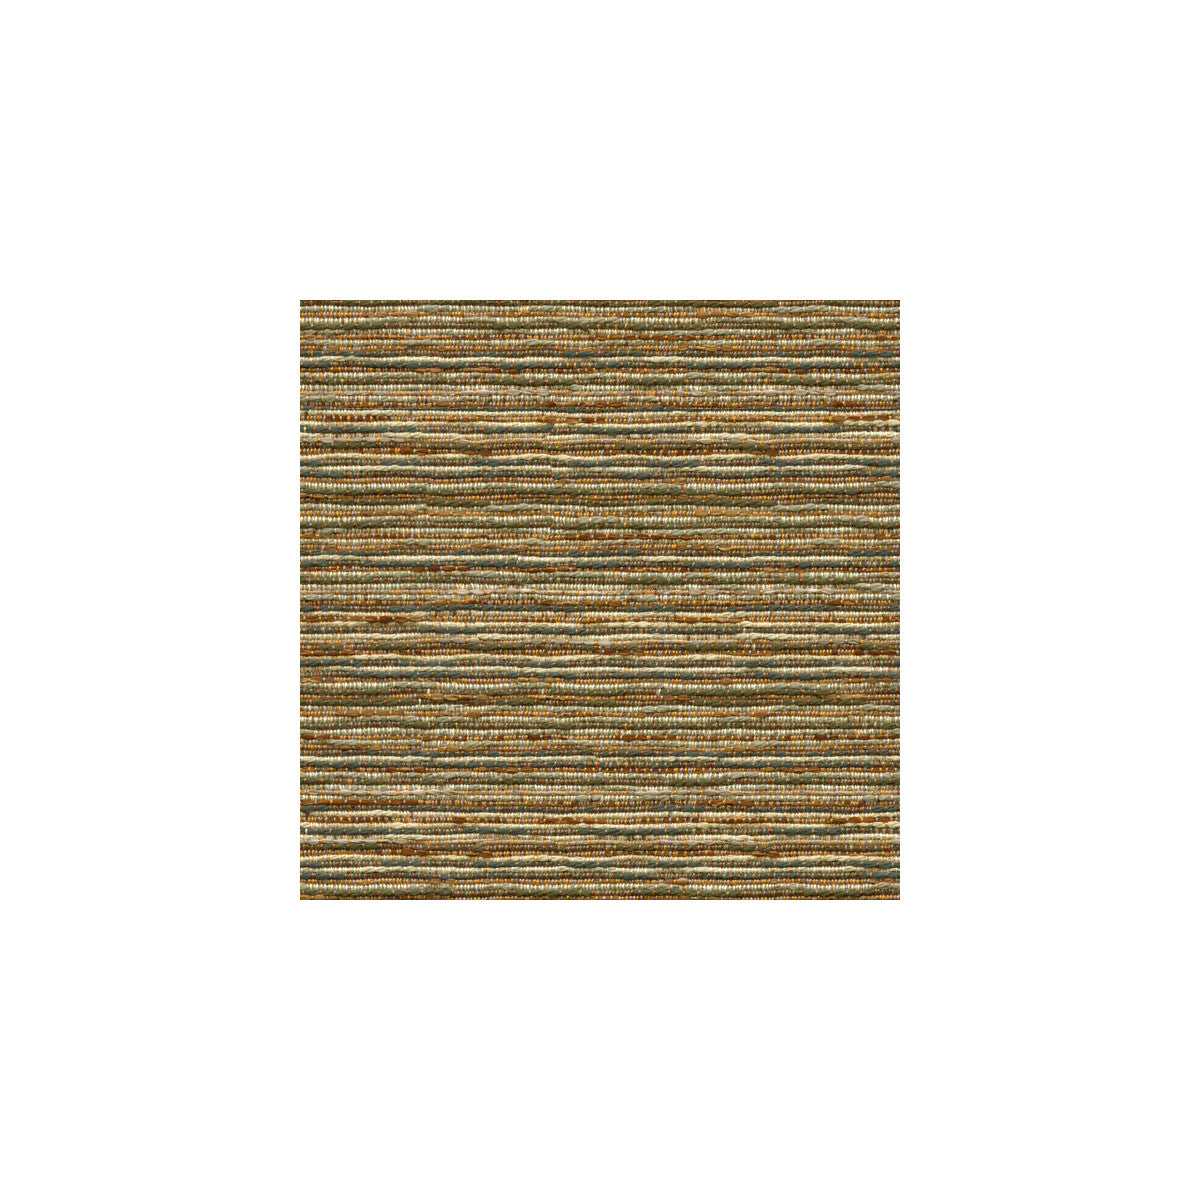 Kravet Smart fabric in 33029-616 color - pattern 33029.616.0 - by Kravet Smart